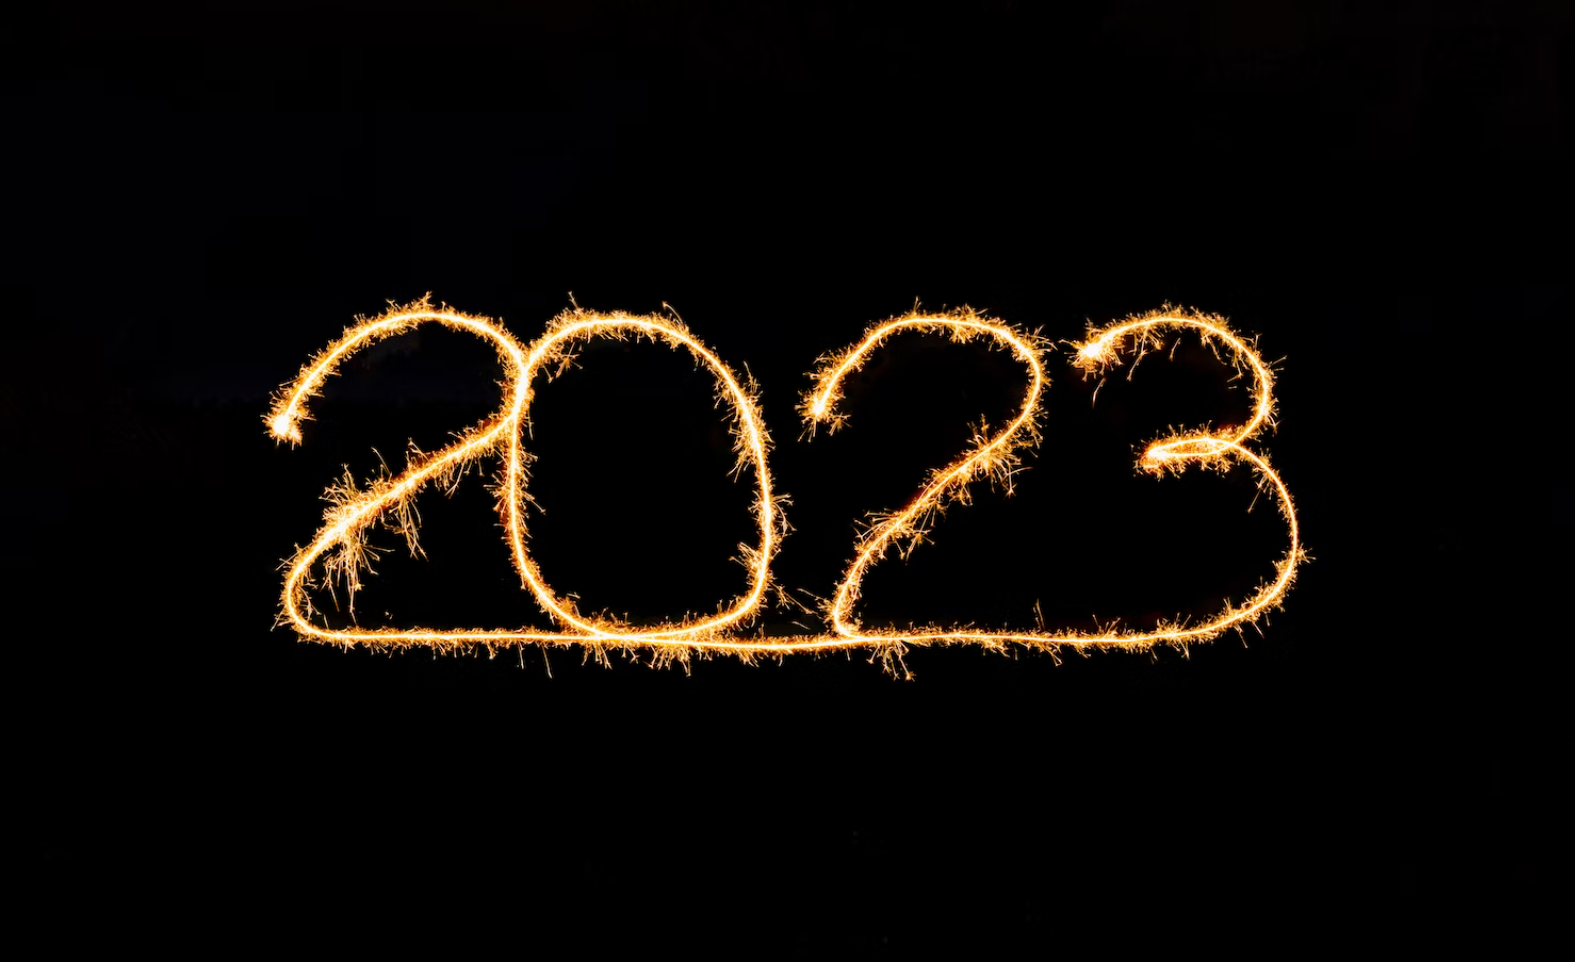 2023 in fireworks